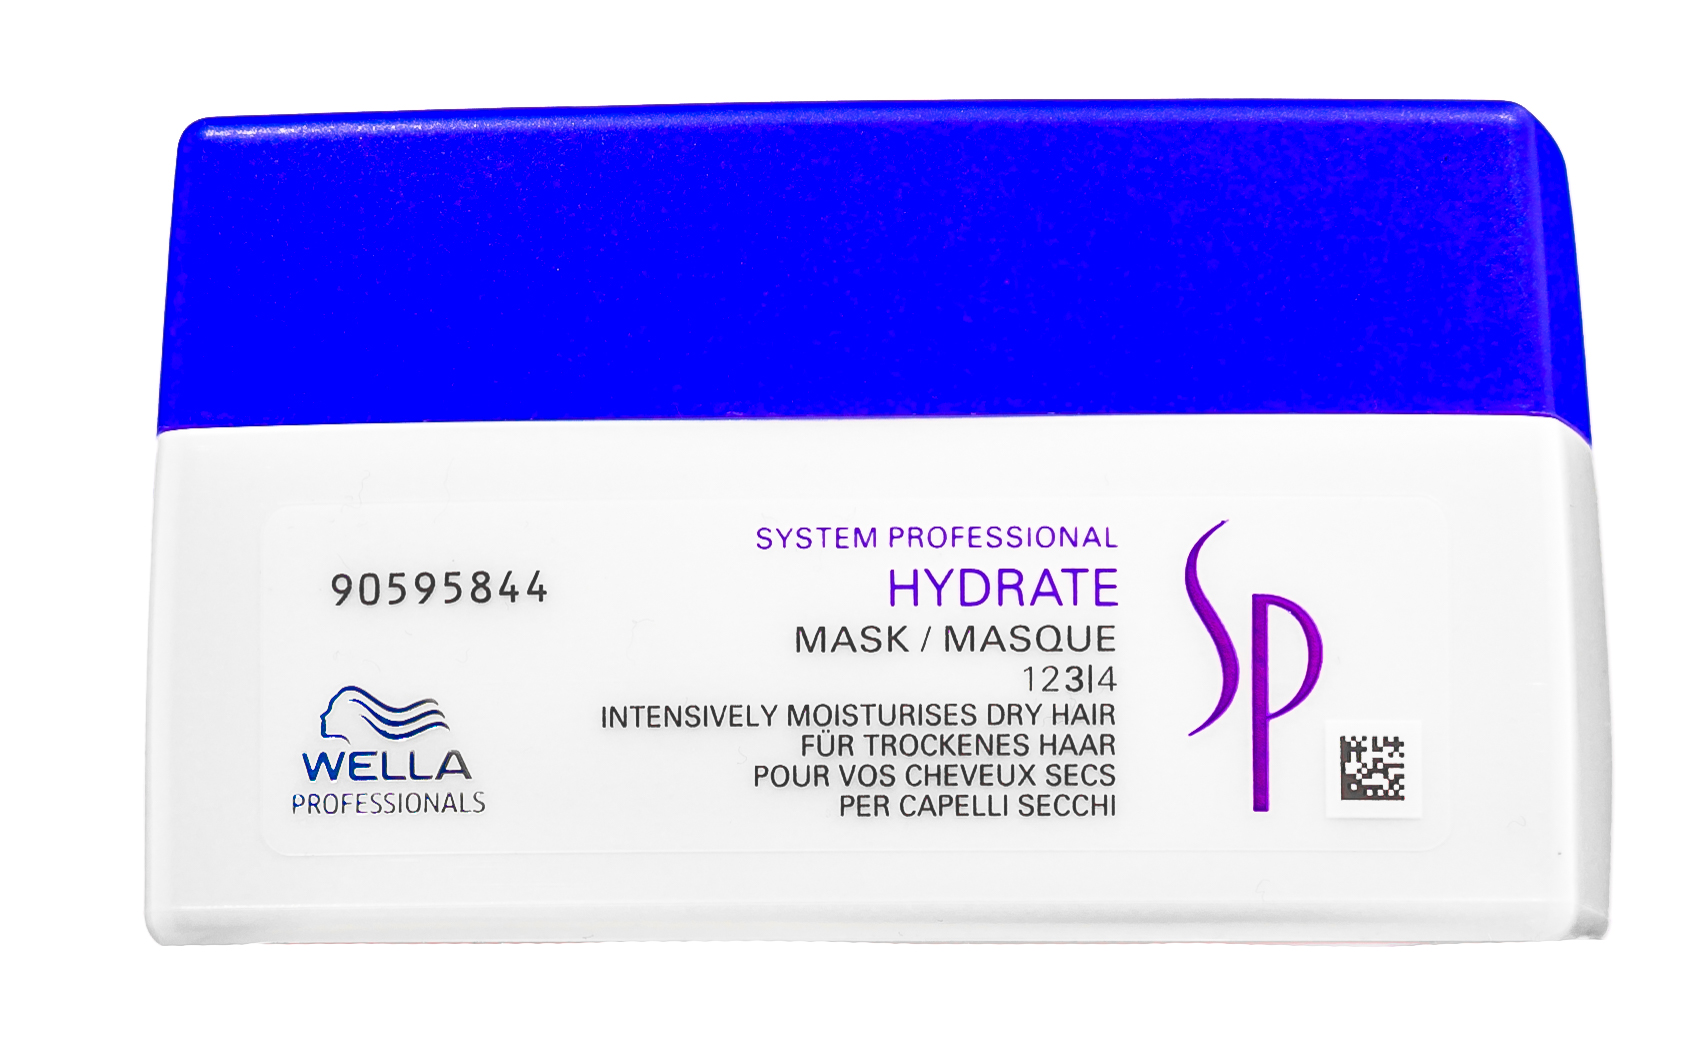 Увлажняющая маска Wella System Professional Hydrate для нормальных и сухих волос, 200 мл крем маска для лица ahava time to hydrate hydration cream mask 100мл